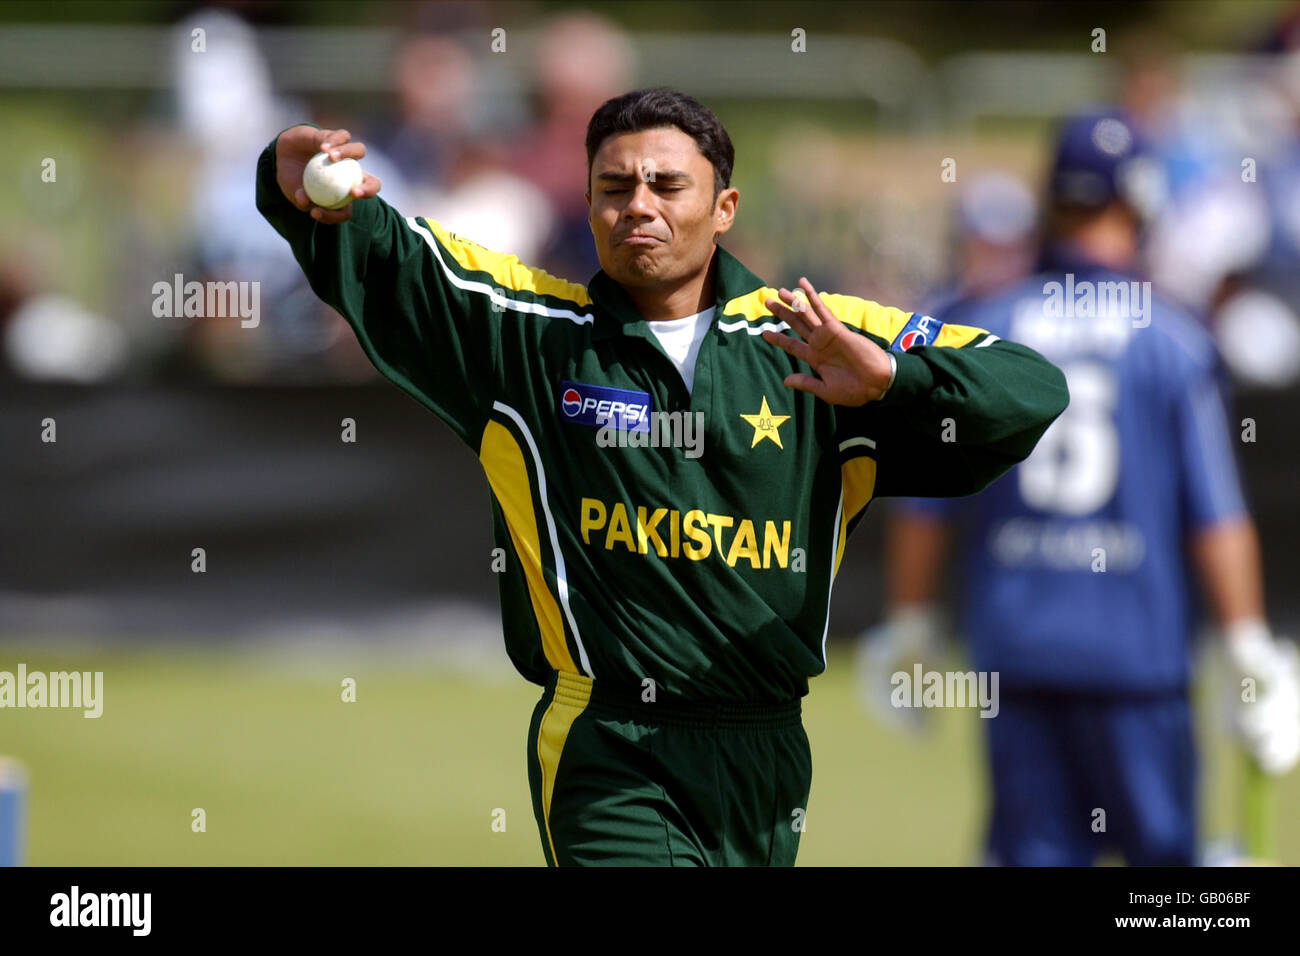 Cricket - International Friendly - Scotland v Pakistan. Bilal Asad, Pakistan Stock Photo